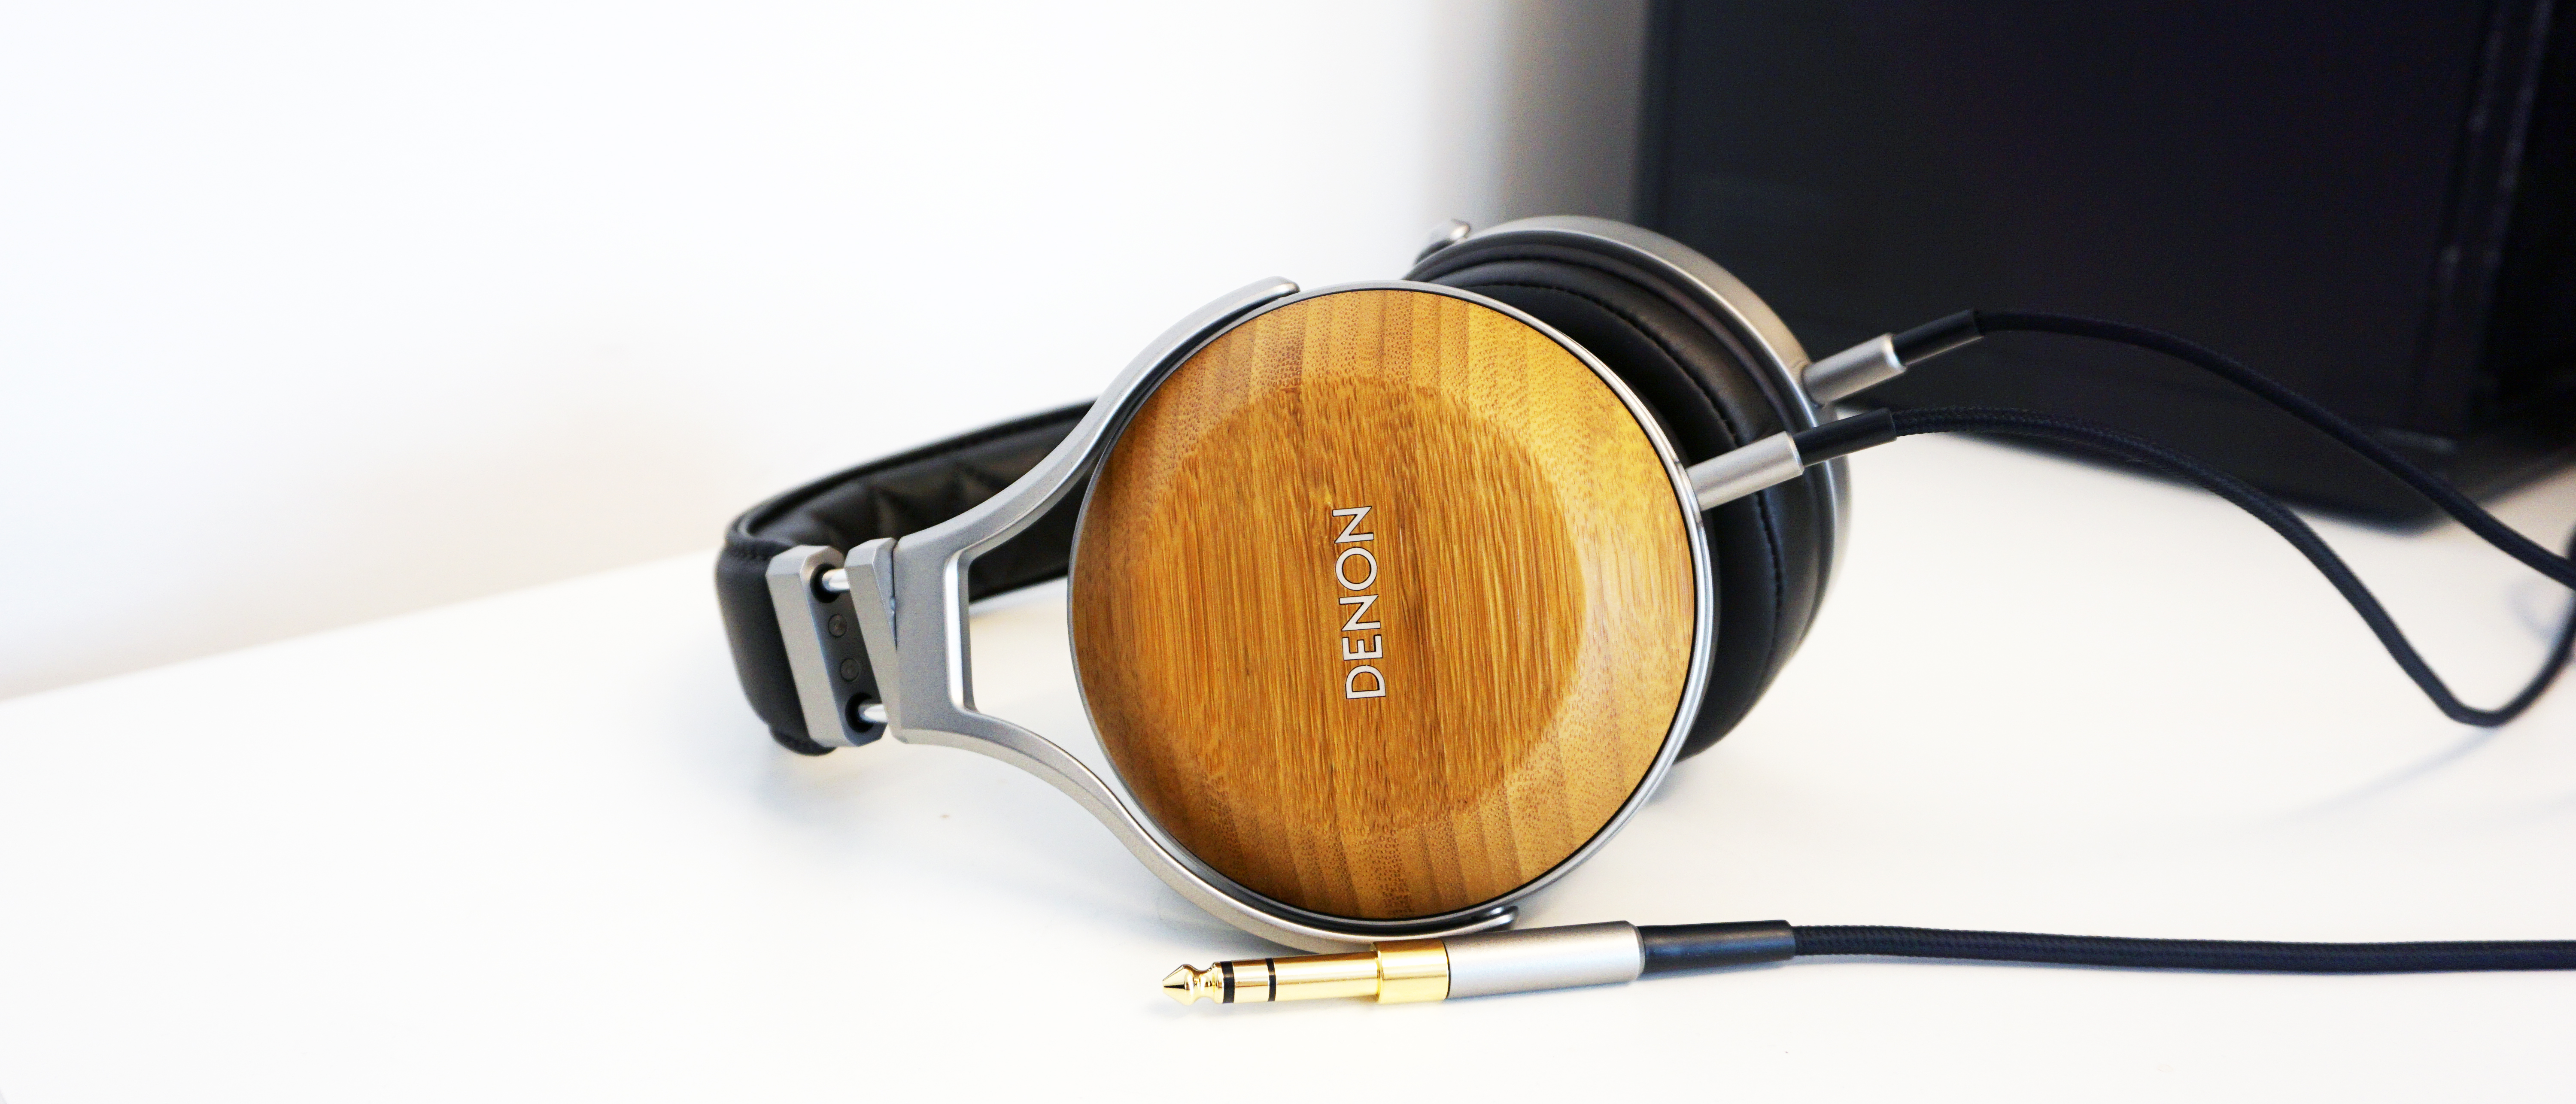 Denon AH-D9200 over-ear headphones TechRadar review 